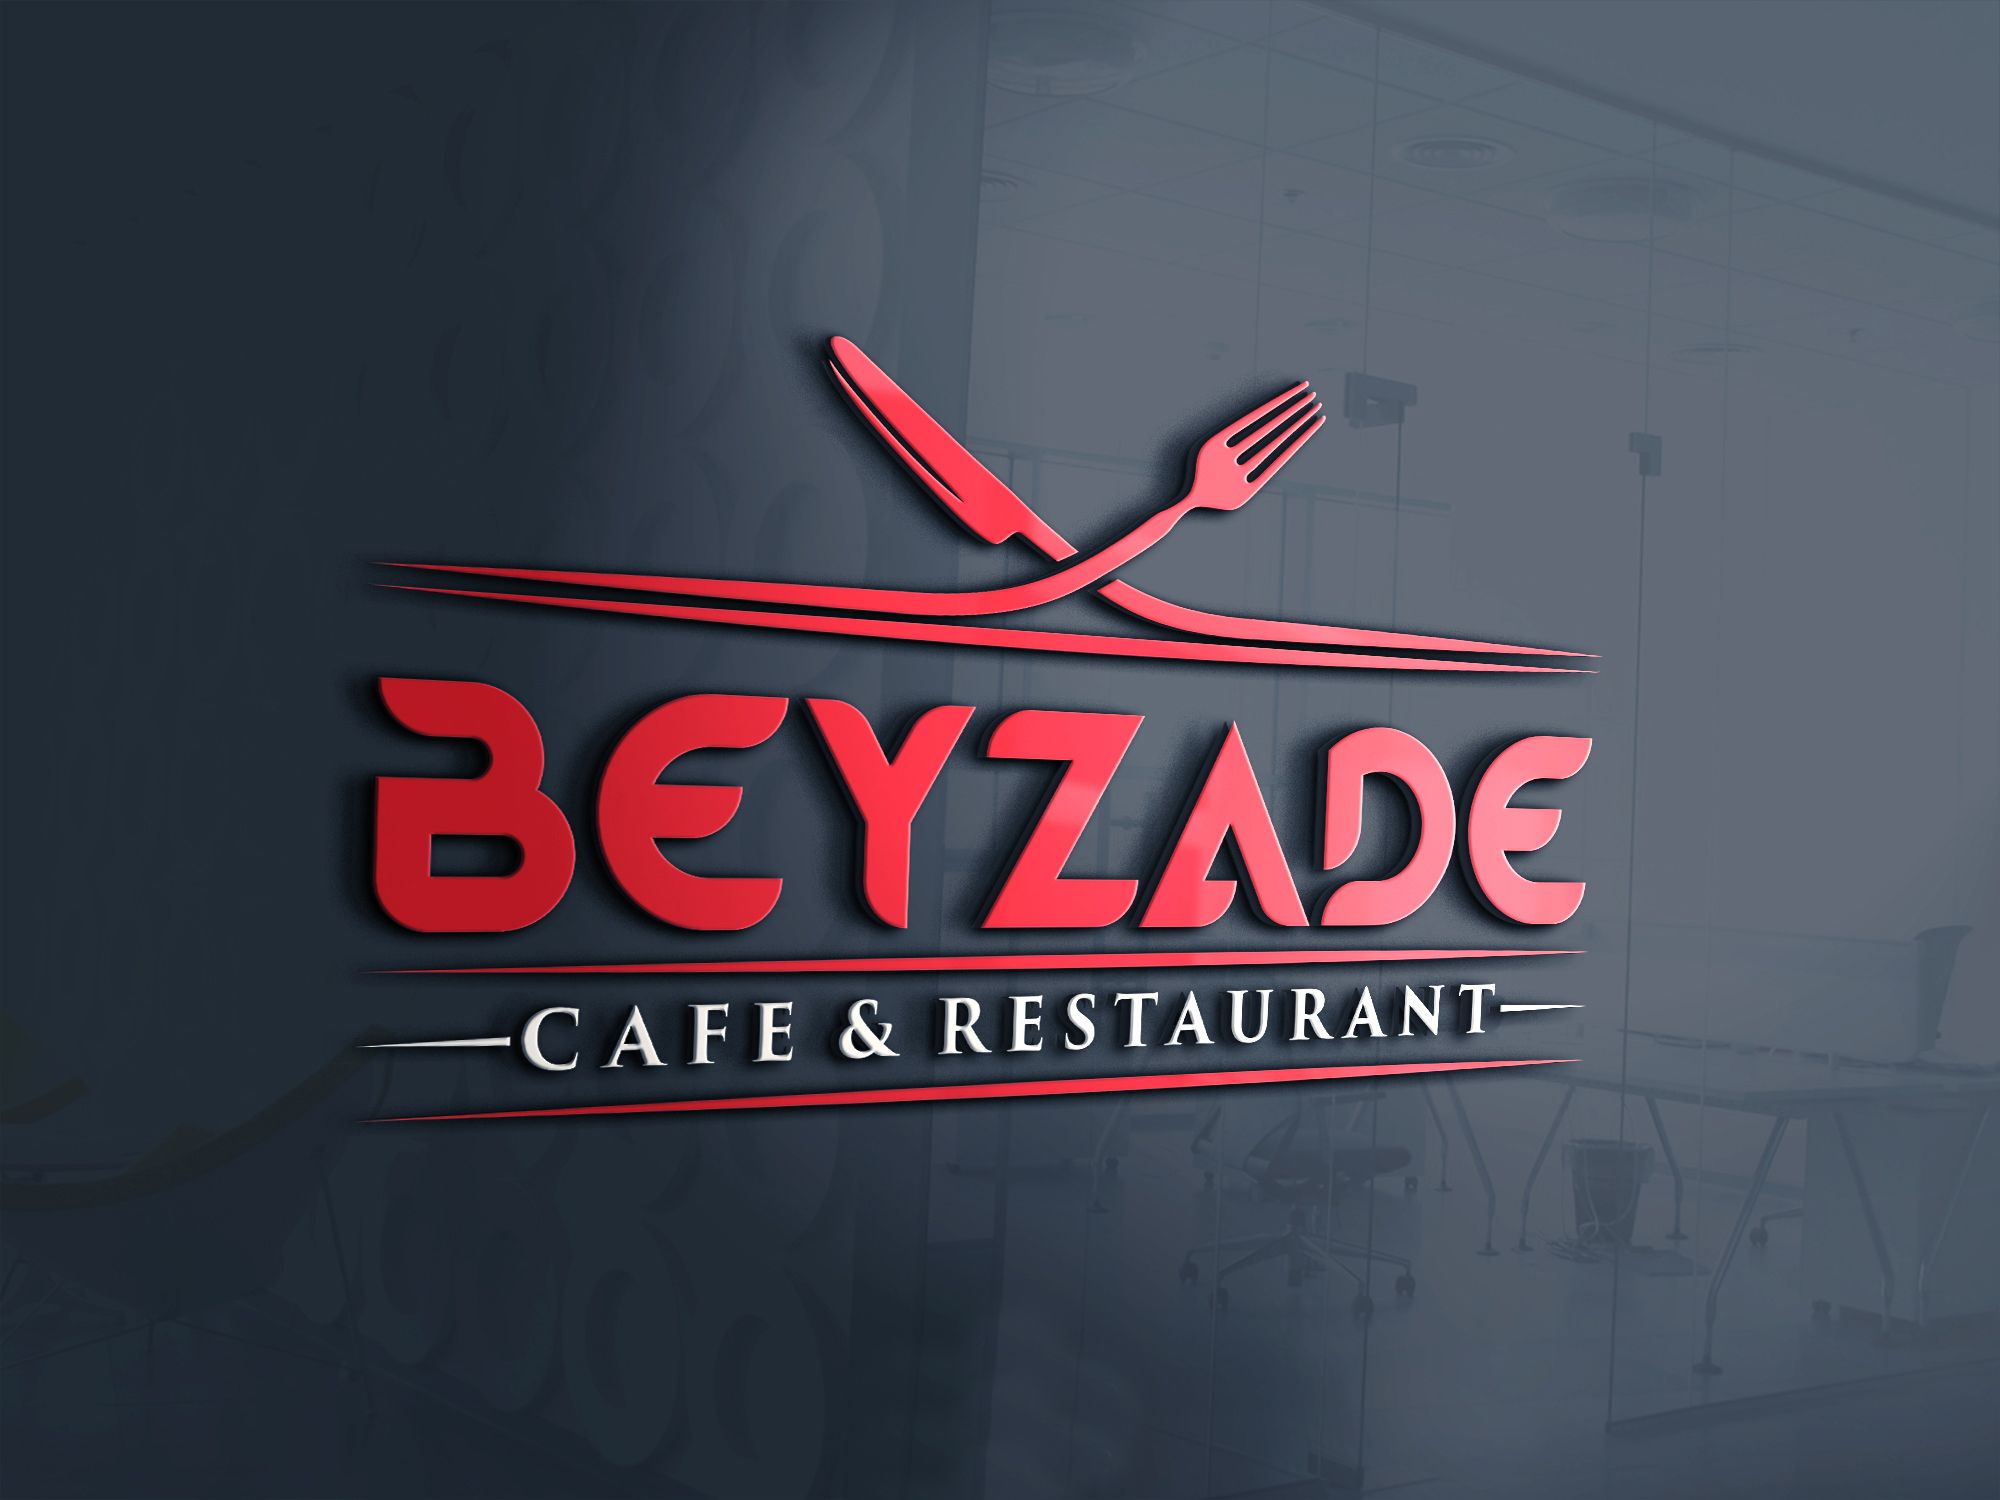 Beyzade Cafe Restaurant